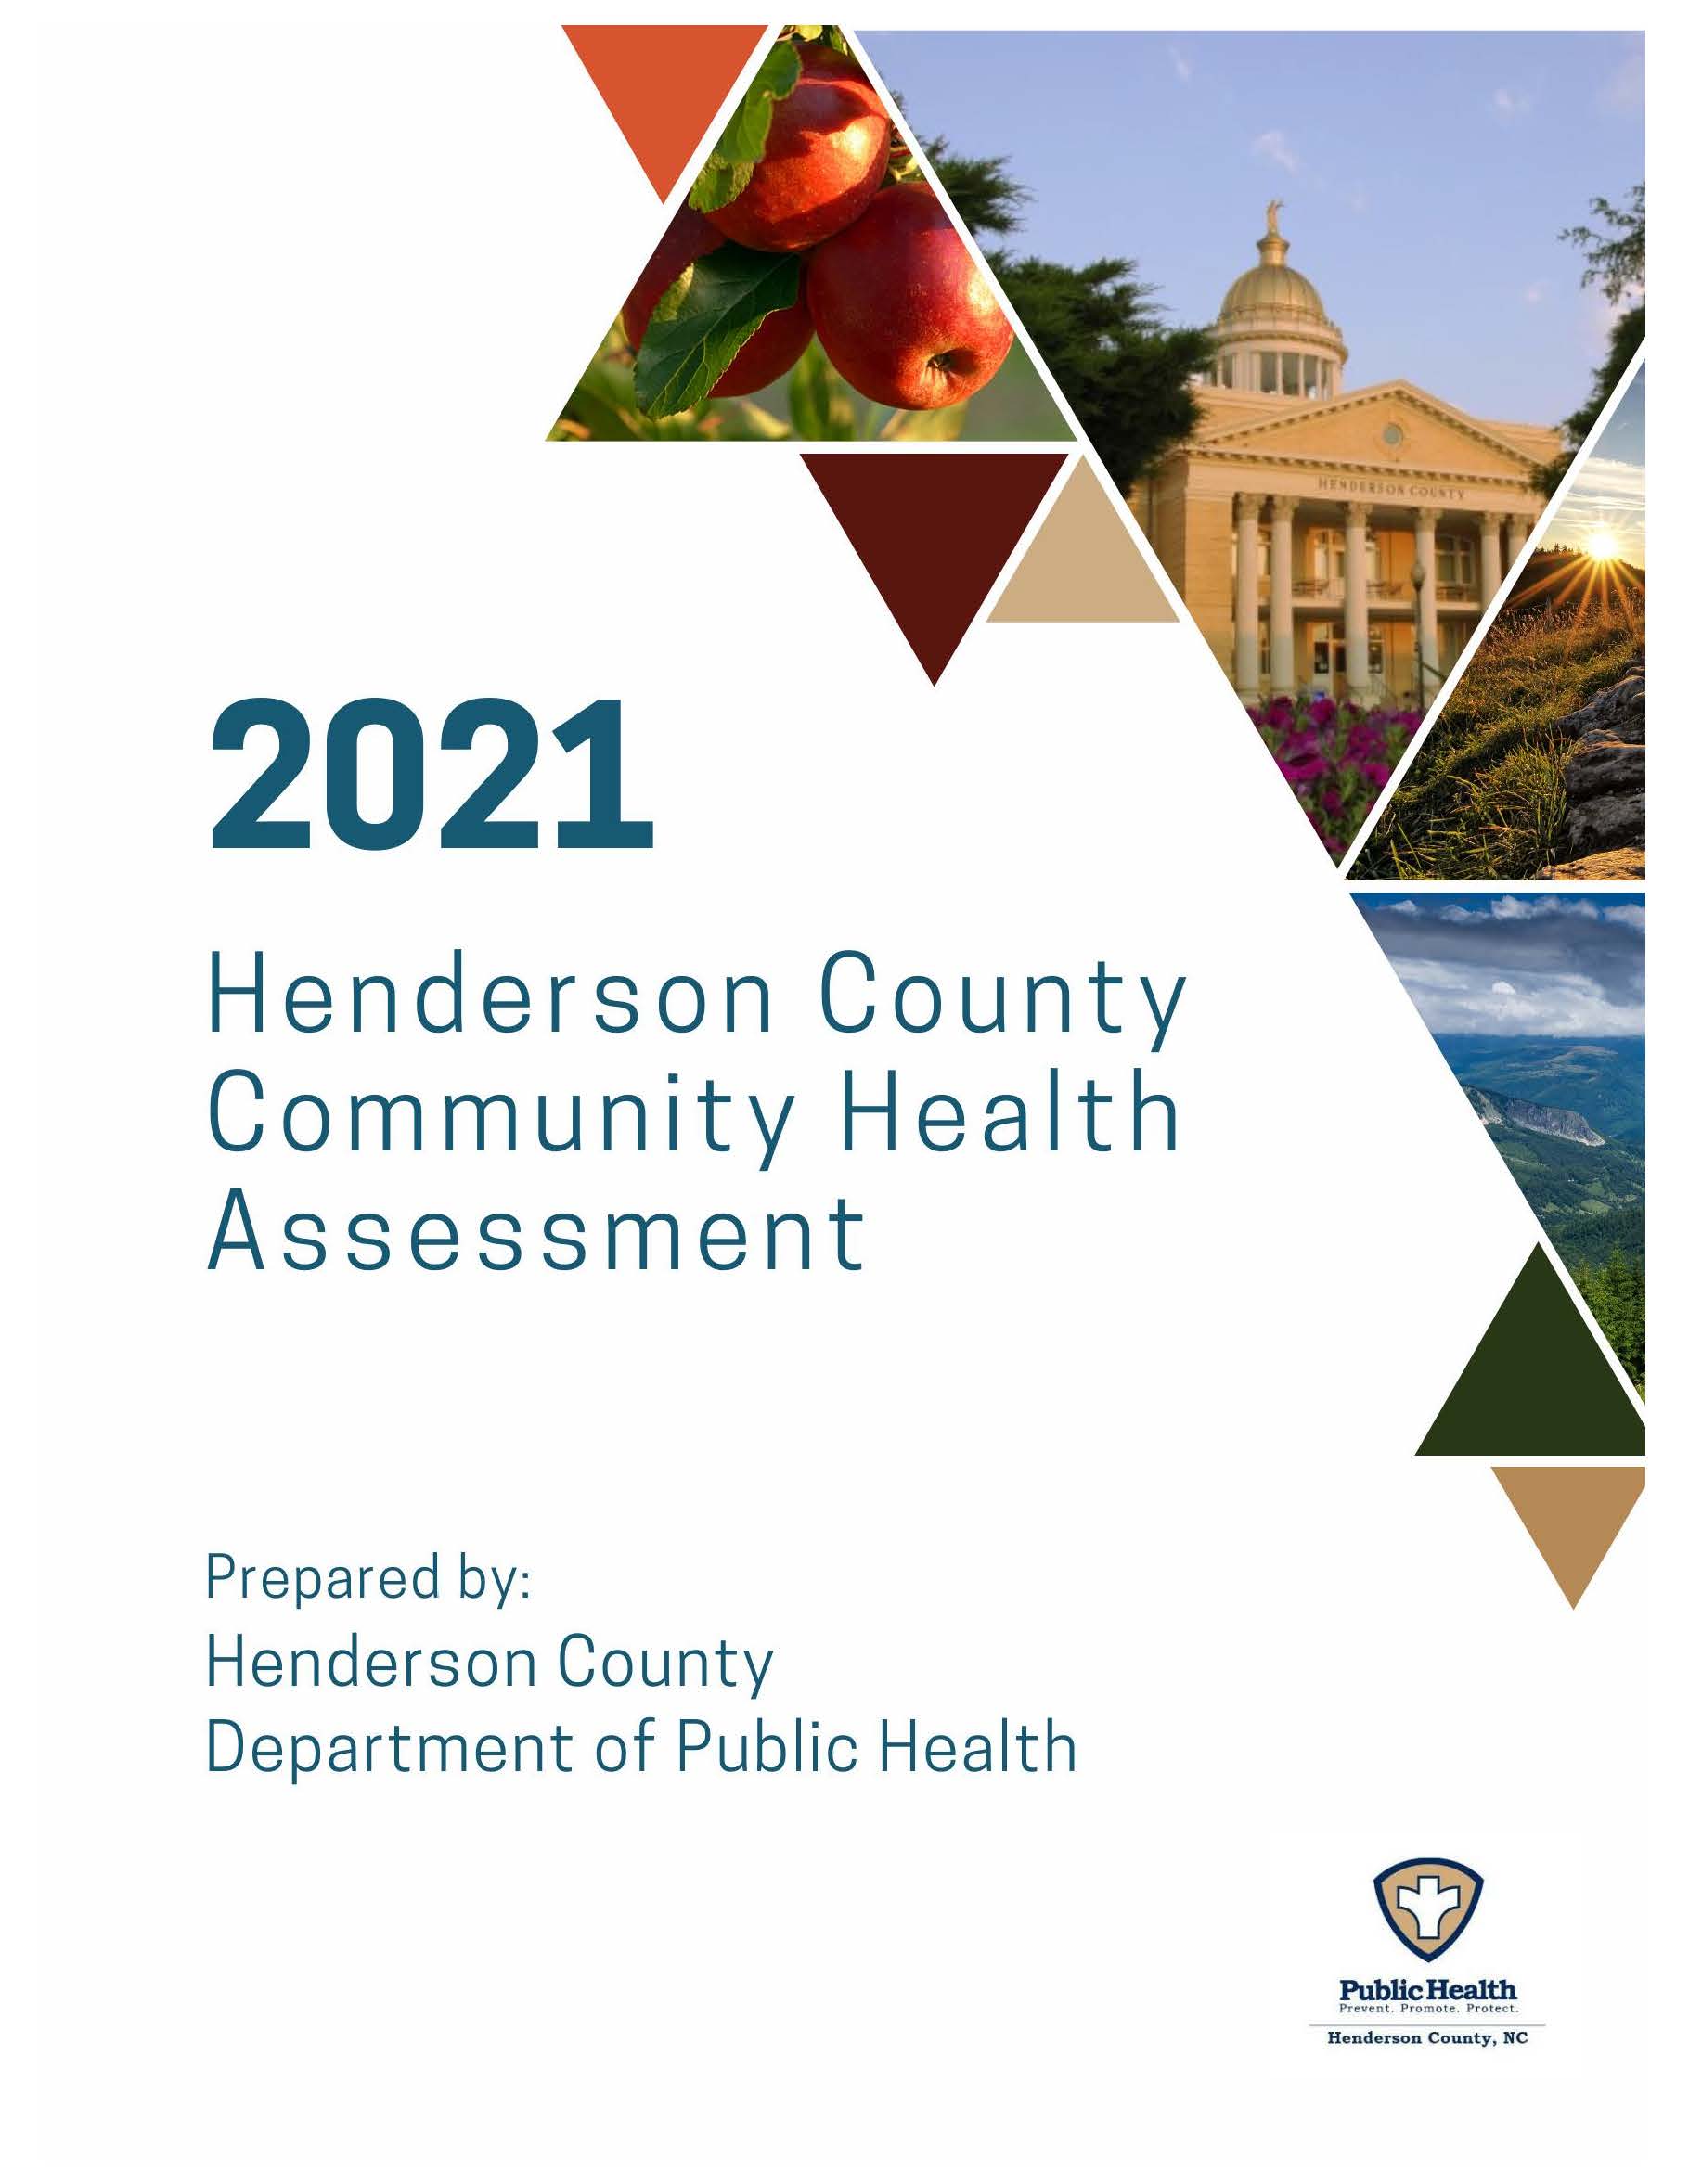 2021 Community Health Assessment Cover